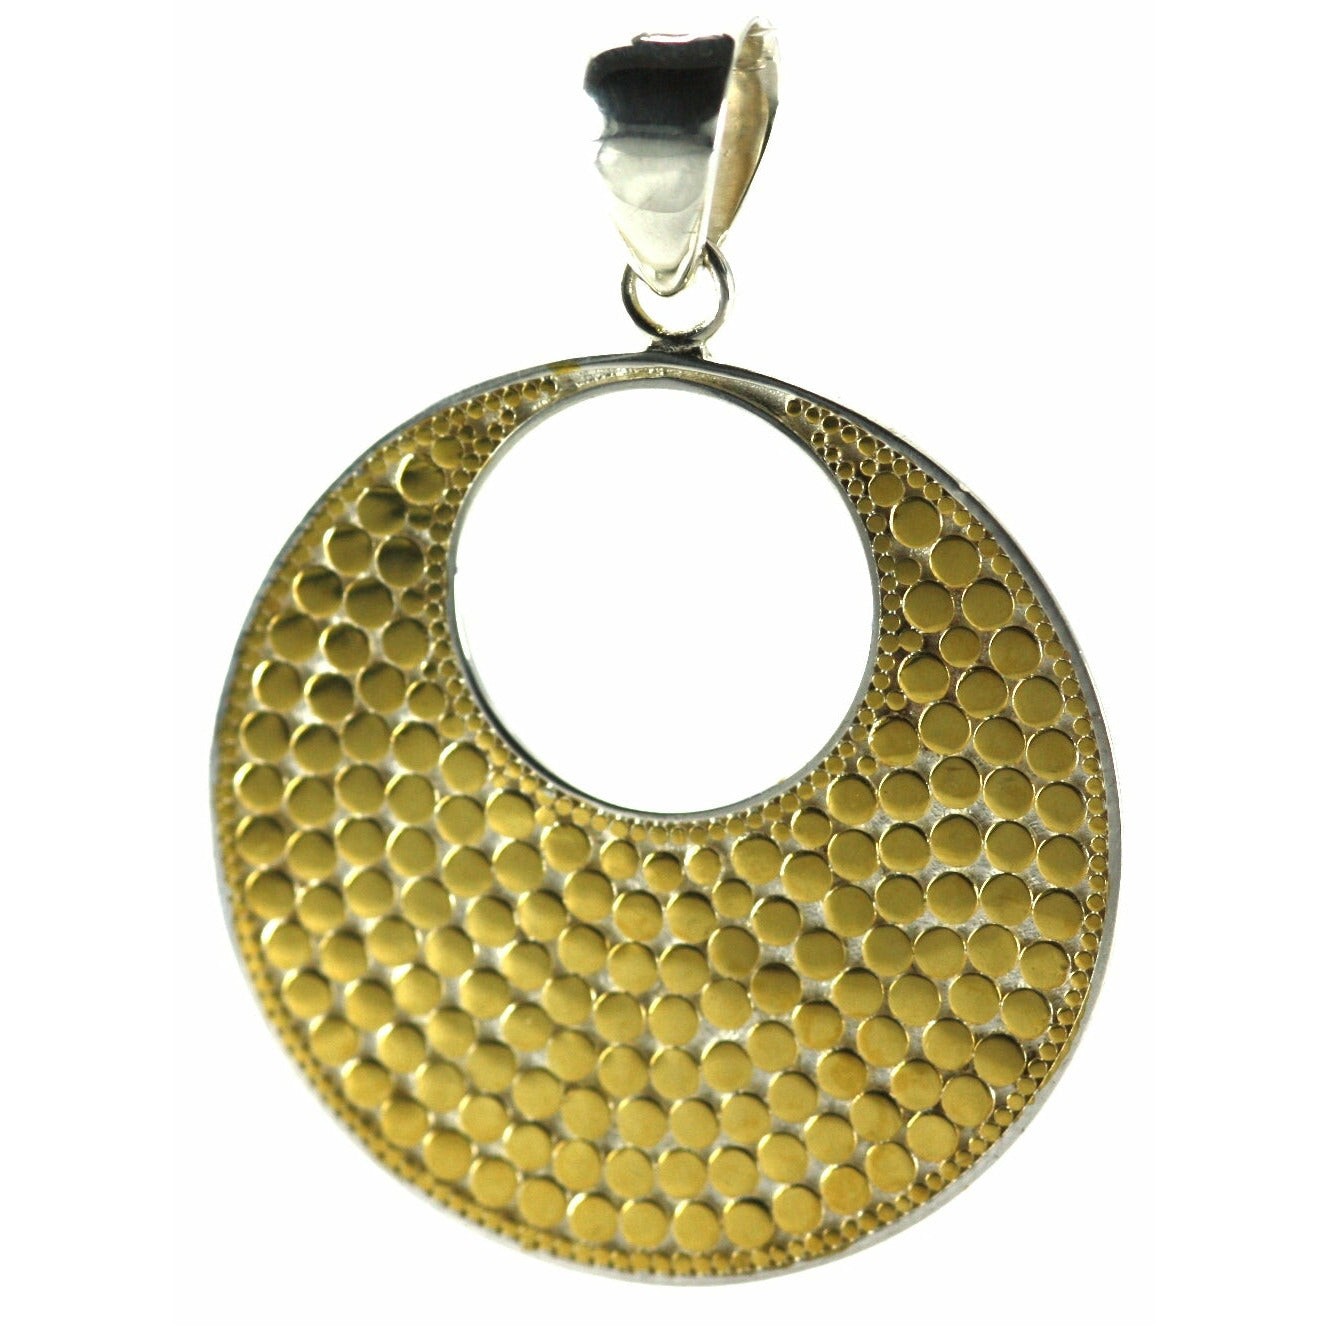 Bali Round Pendant with 18k Gold Vermeil